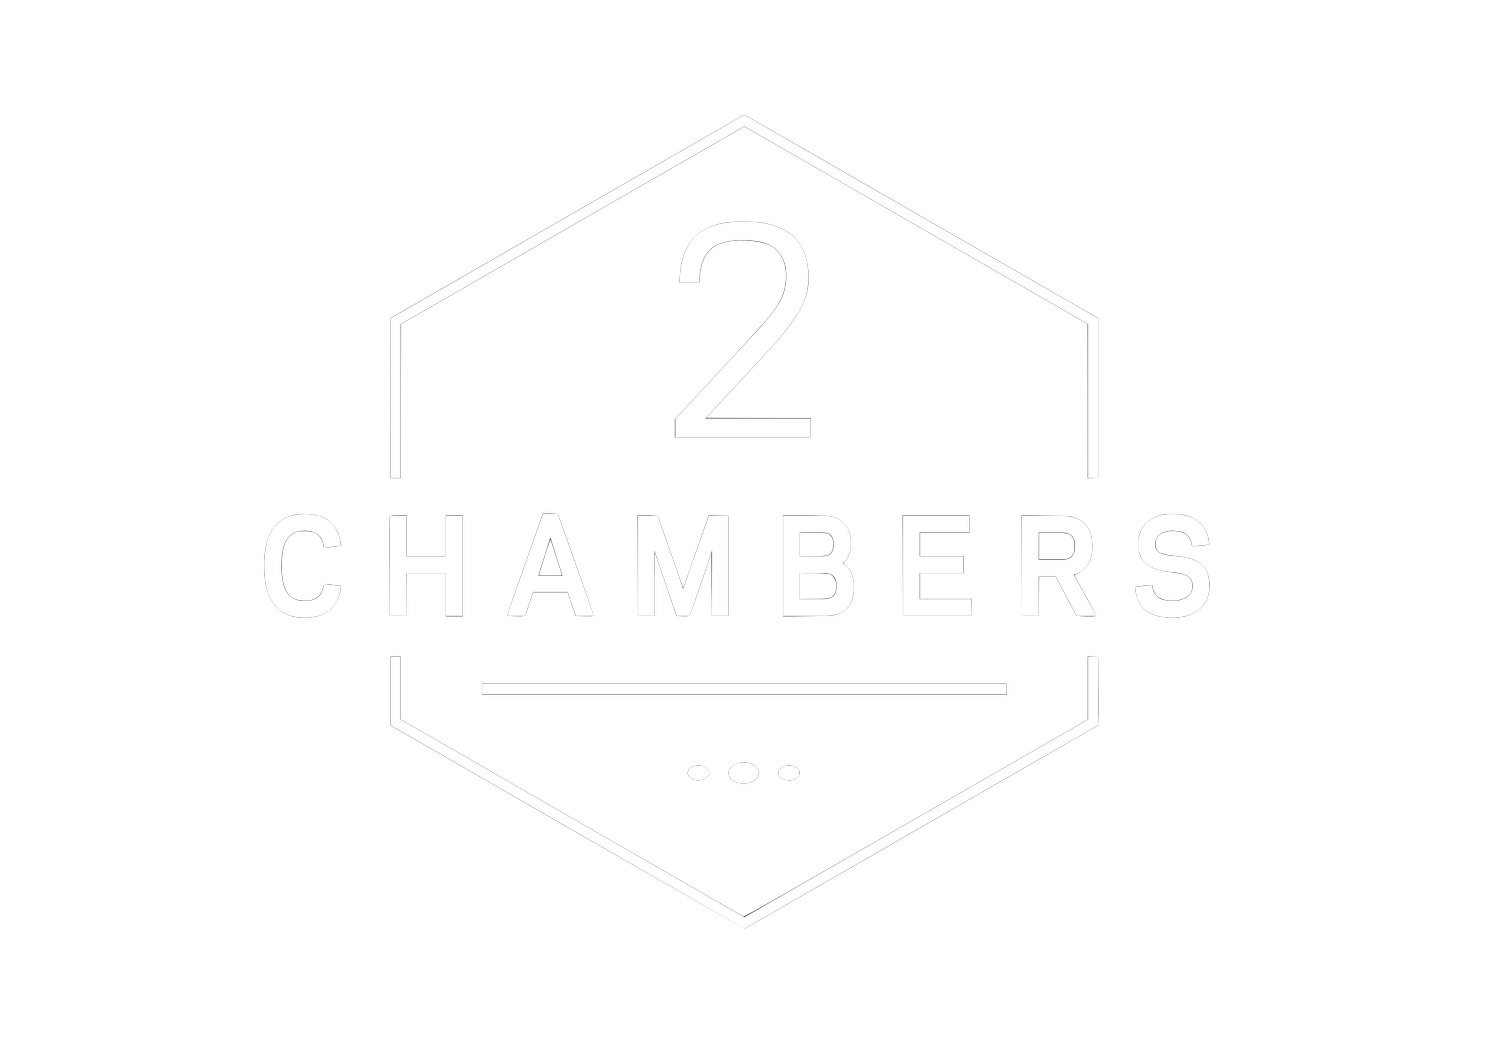 2 Chambers 